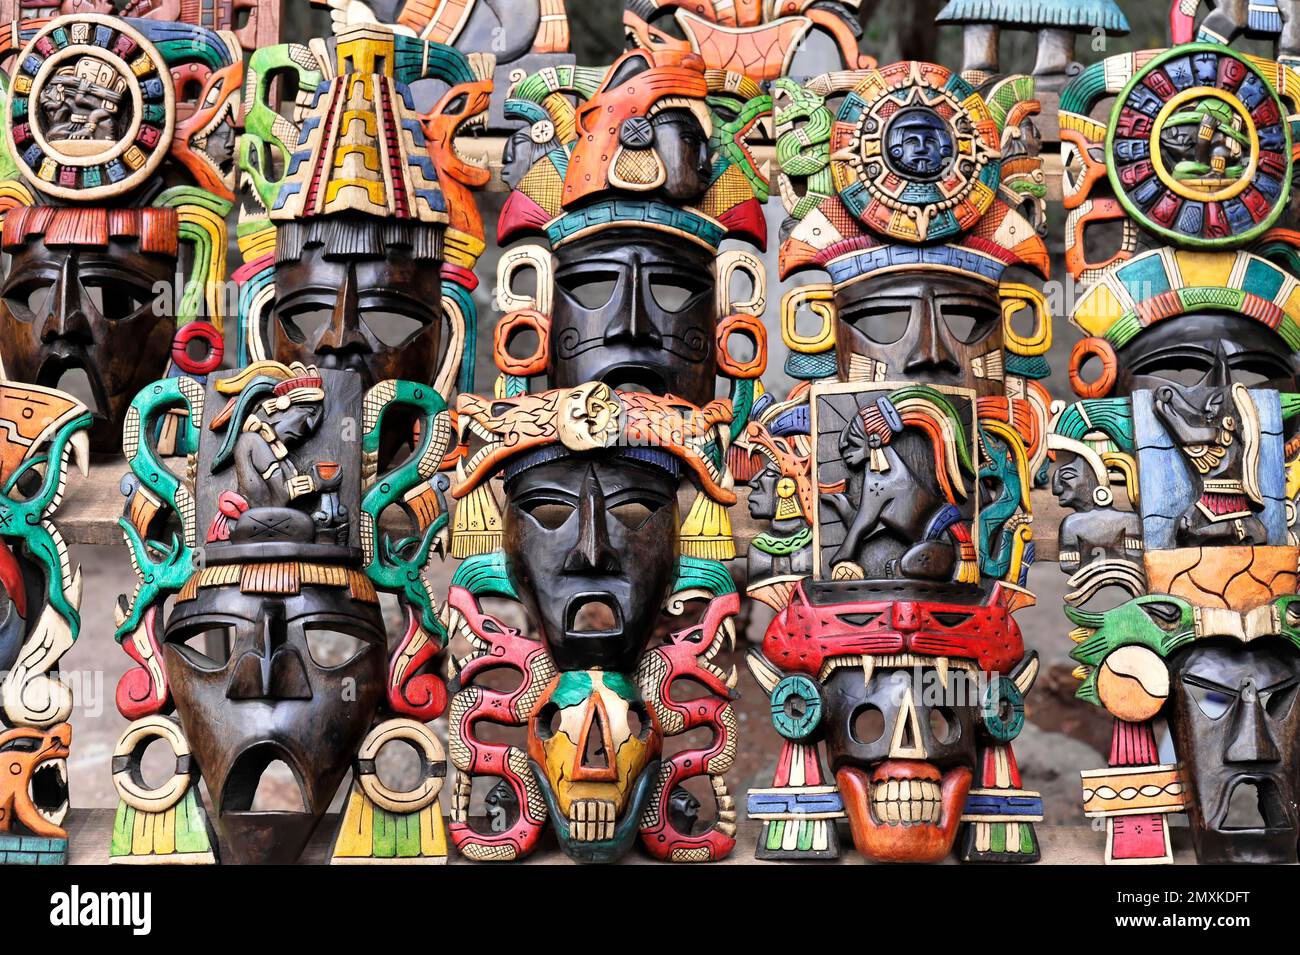 Masks, handicrafts, souvenirs, in the entrance area of the Mayan ruins of Chichén Itzá, Chichén Itzá, Yucatán, Mexico, Central America Stock Photo